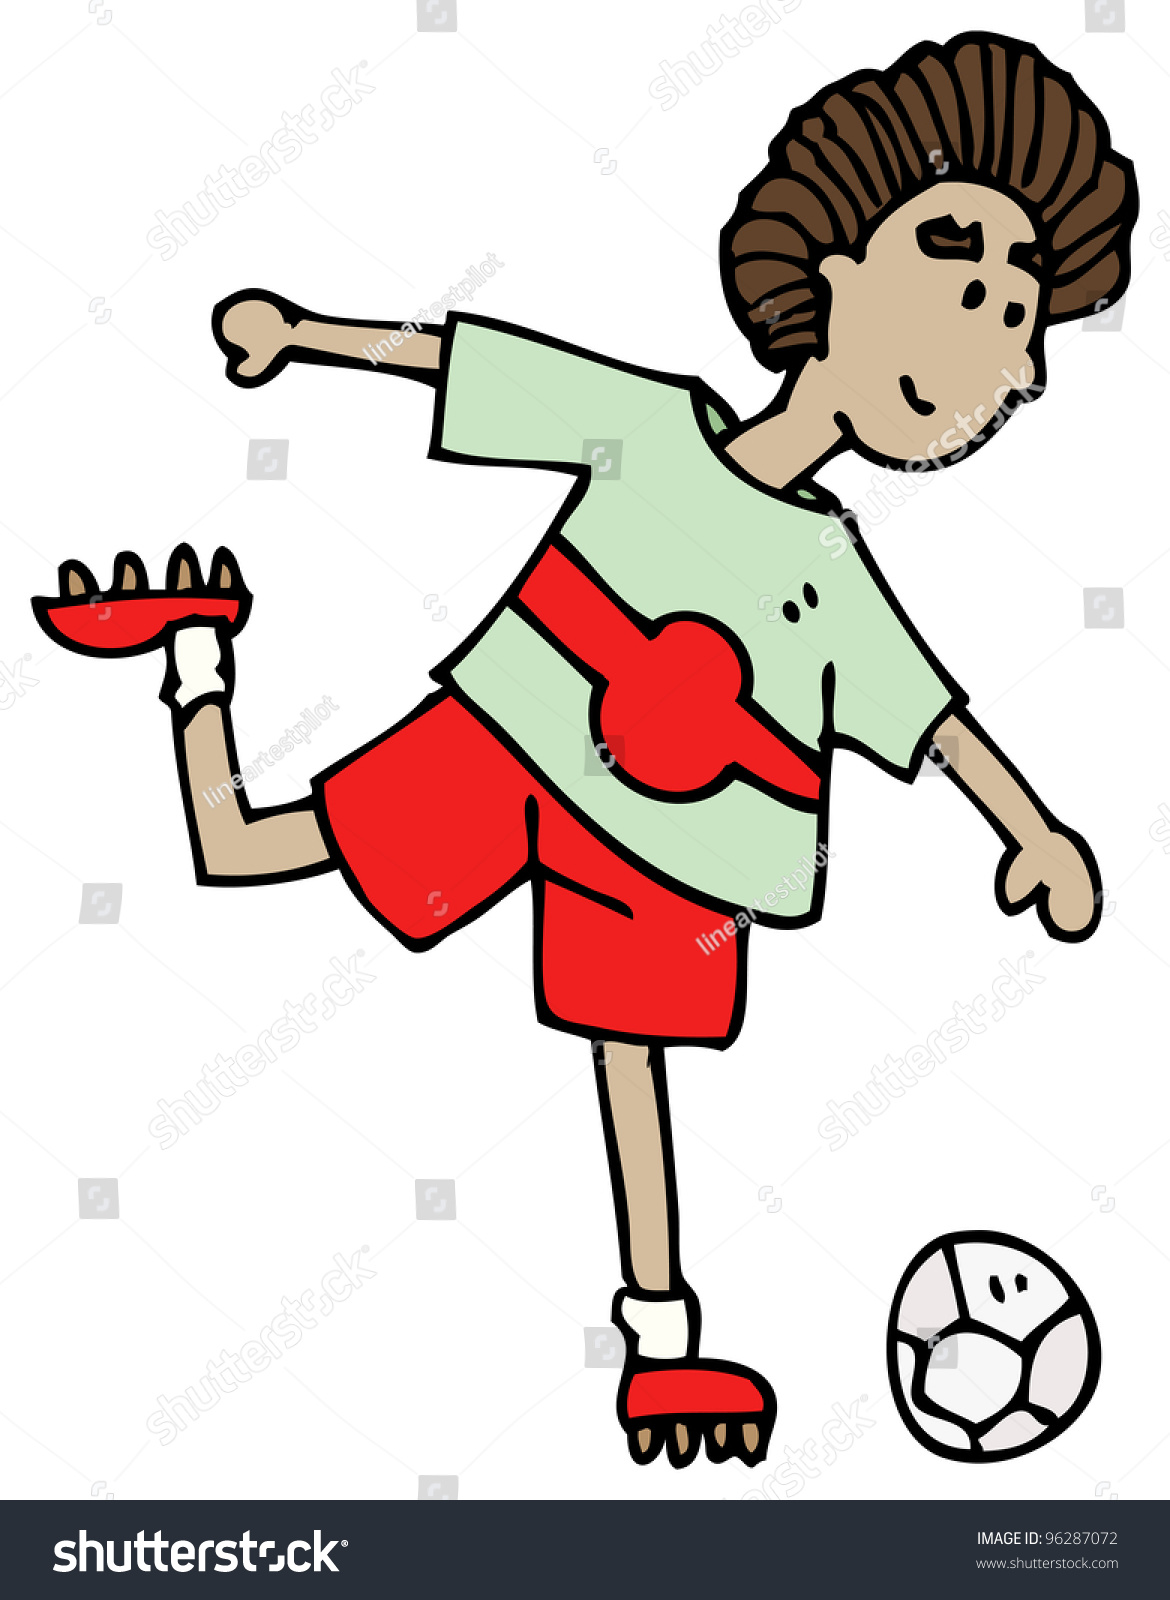 Football Player Cartoon Stock Photo 96287072 : Shutterstock